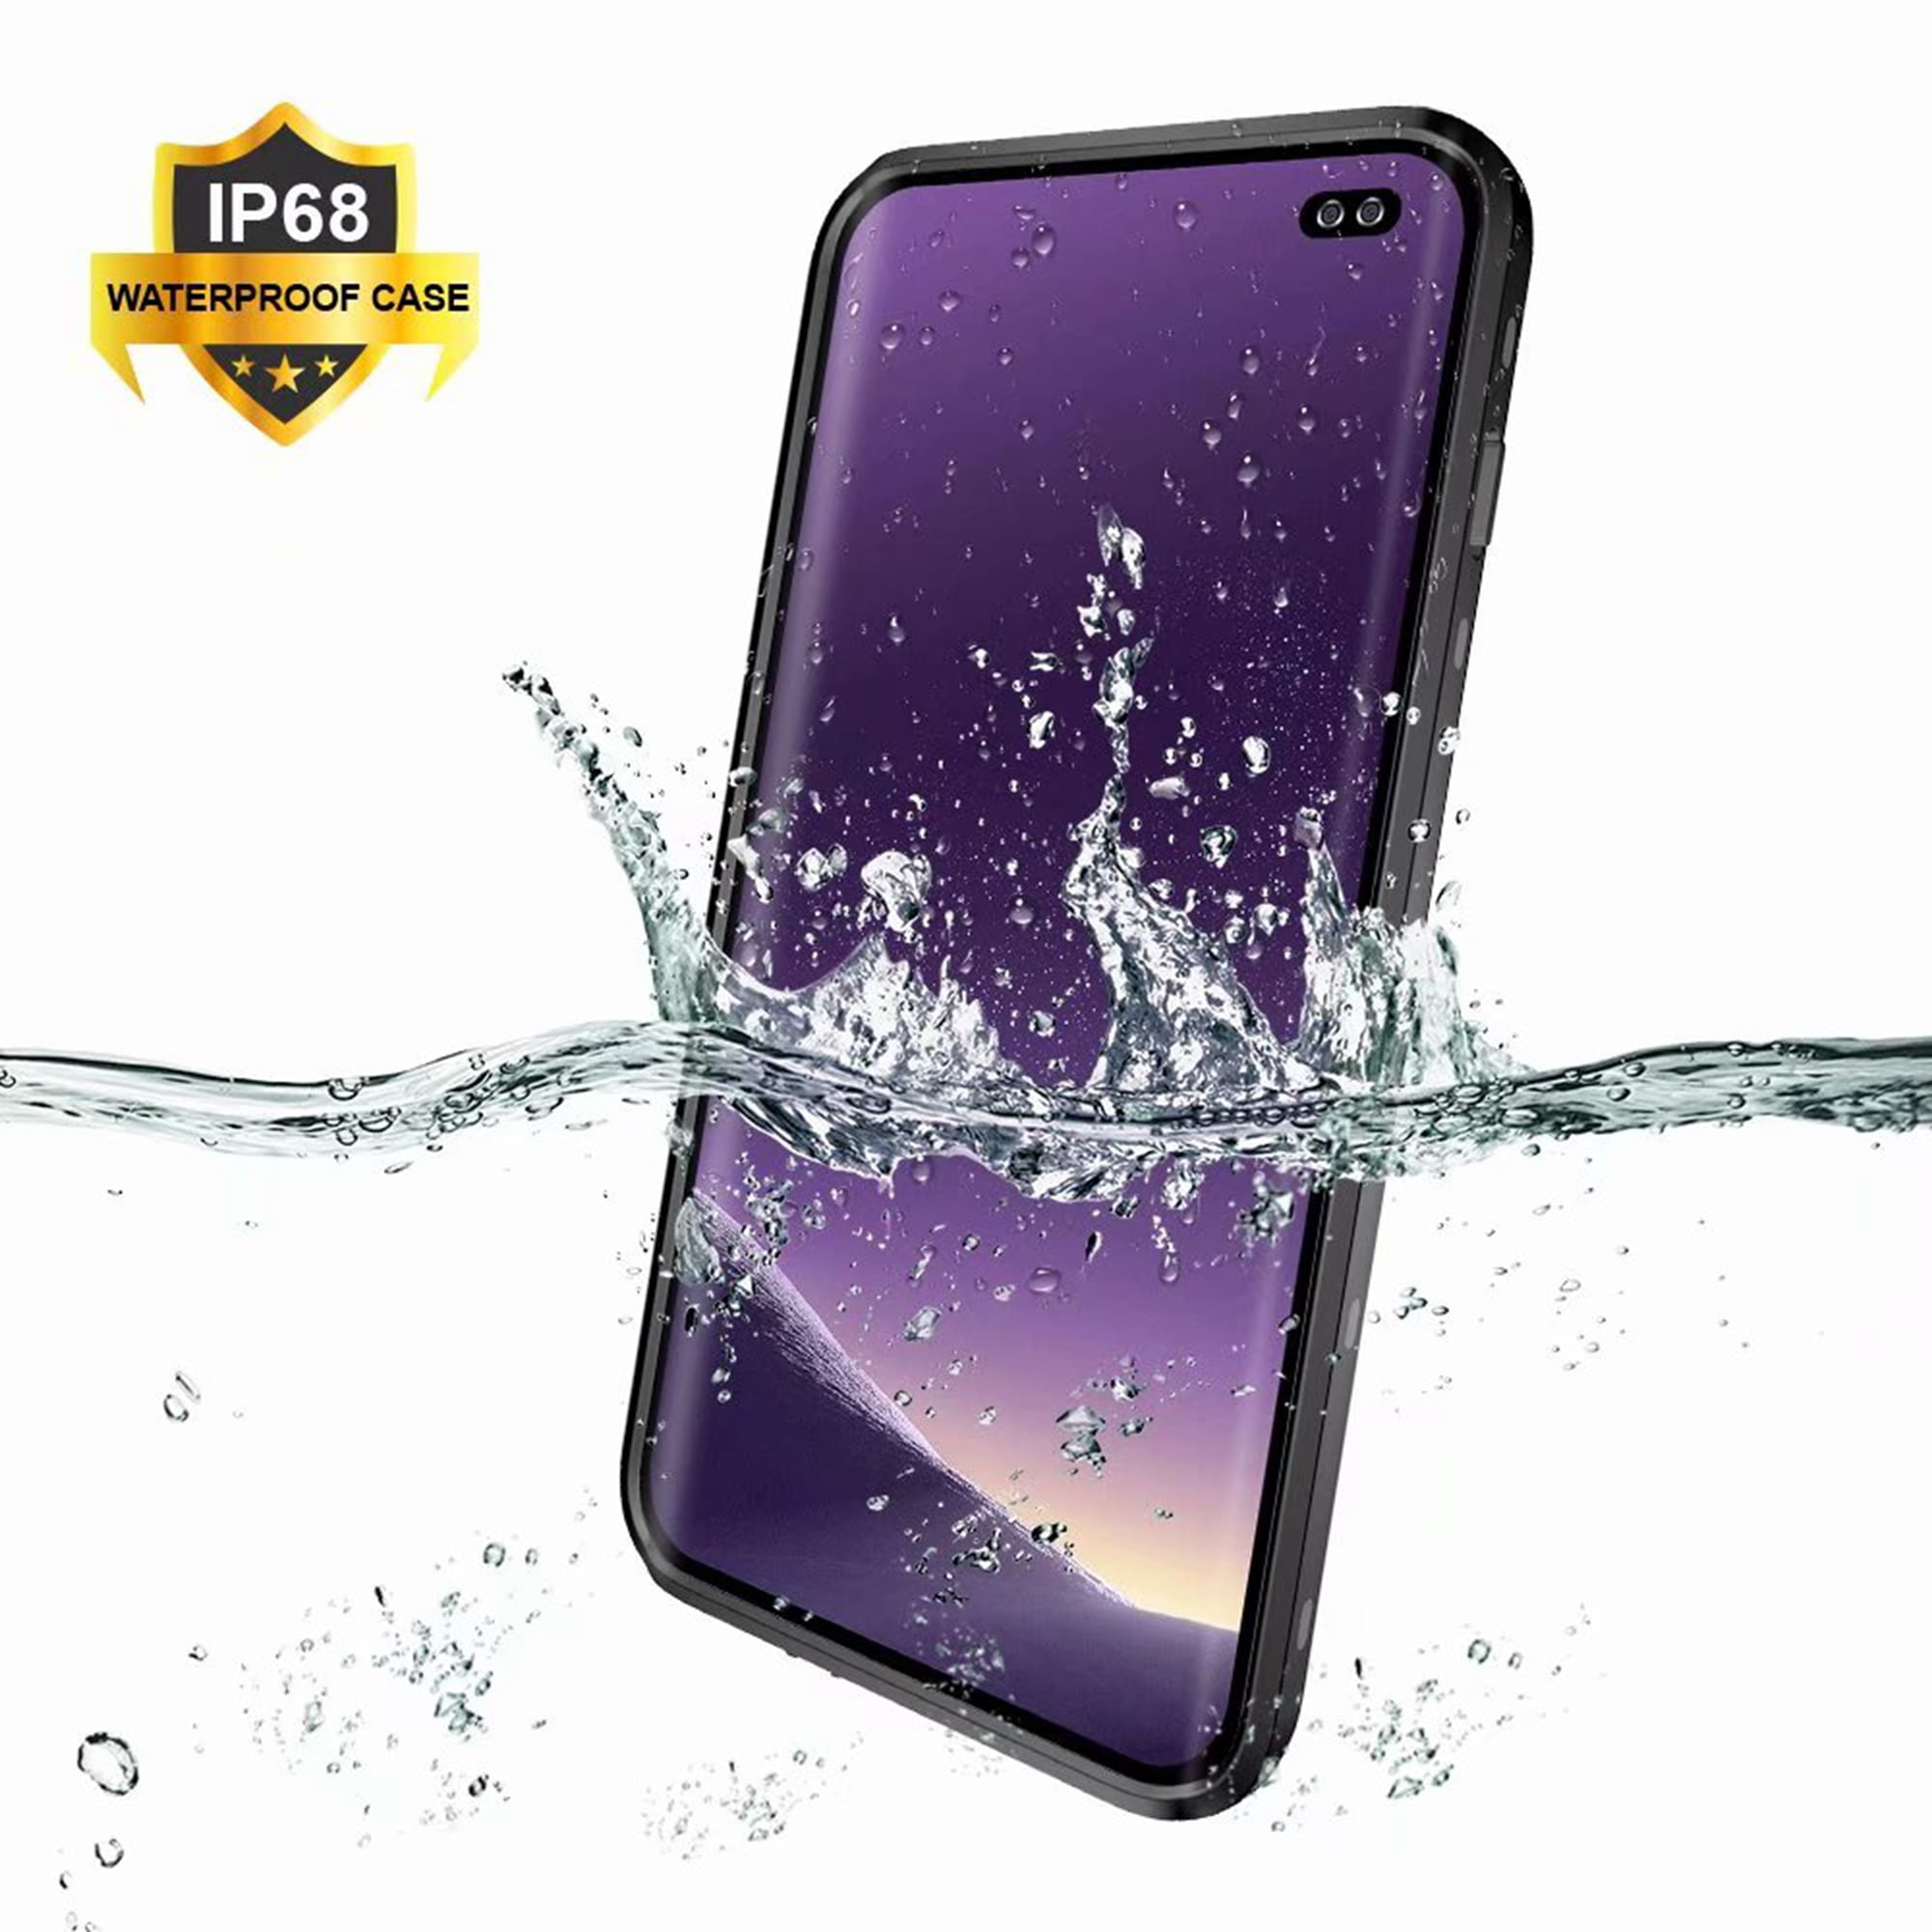 Galaxy S10 Plus Waterproof Case, Shockproof Built-in Screen Protector Case Rugged Resistant Protective Hard Samsung Galaxy S10+,Black Walmart.com